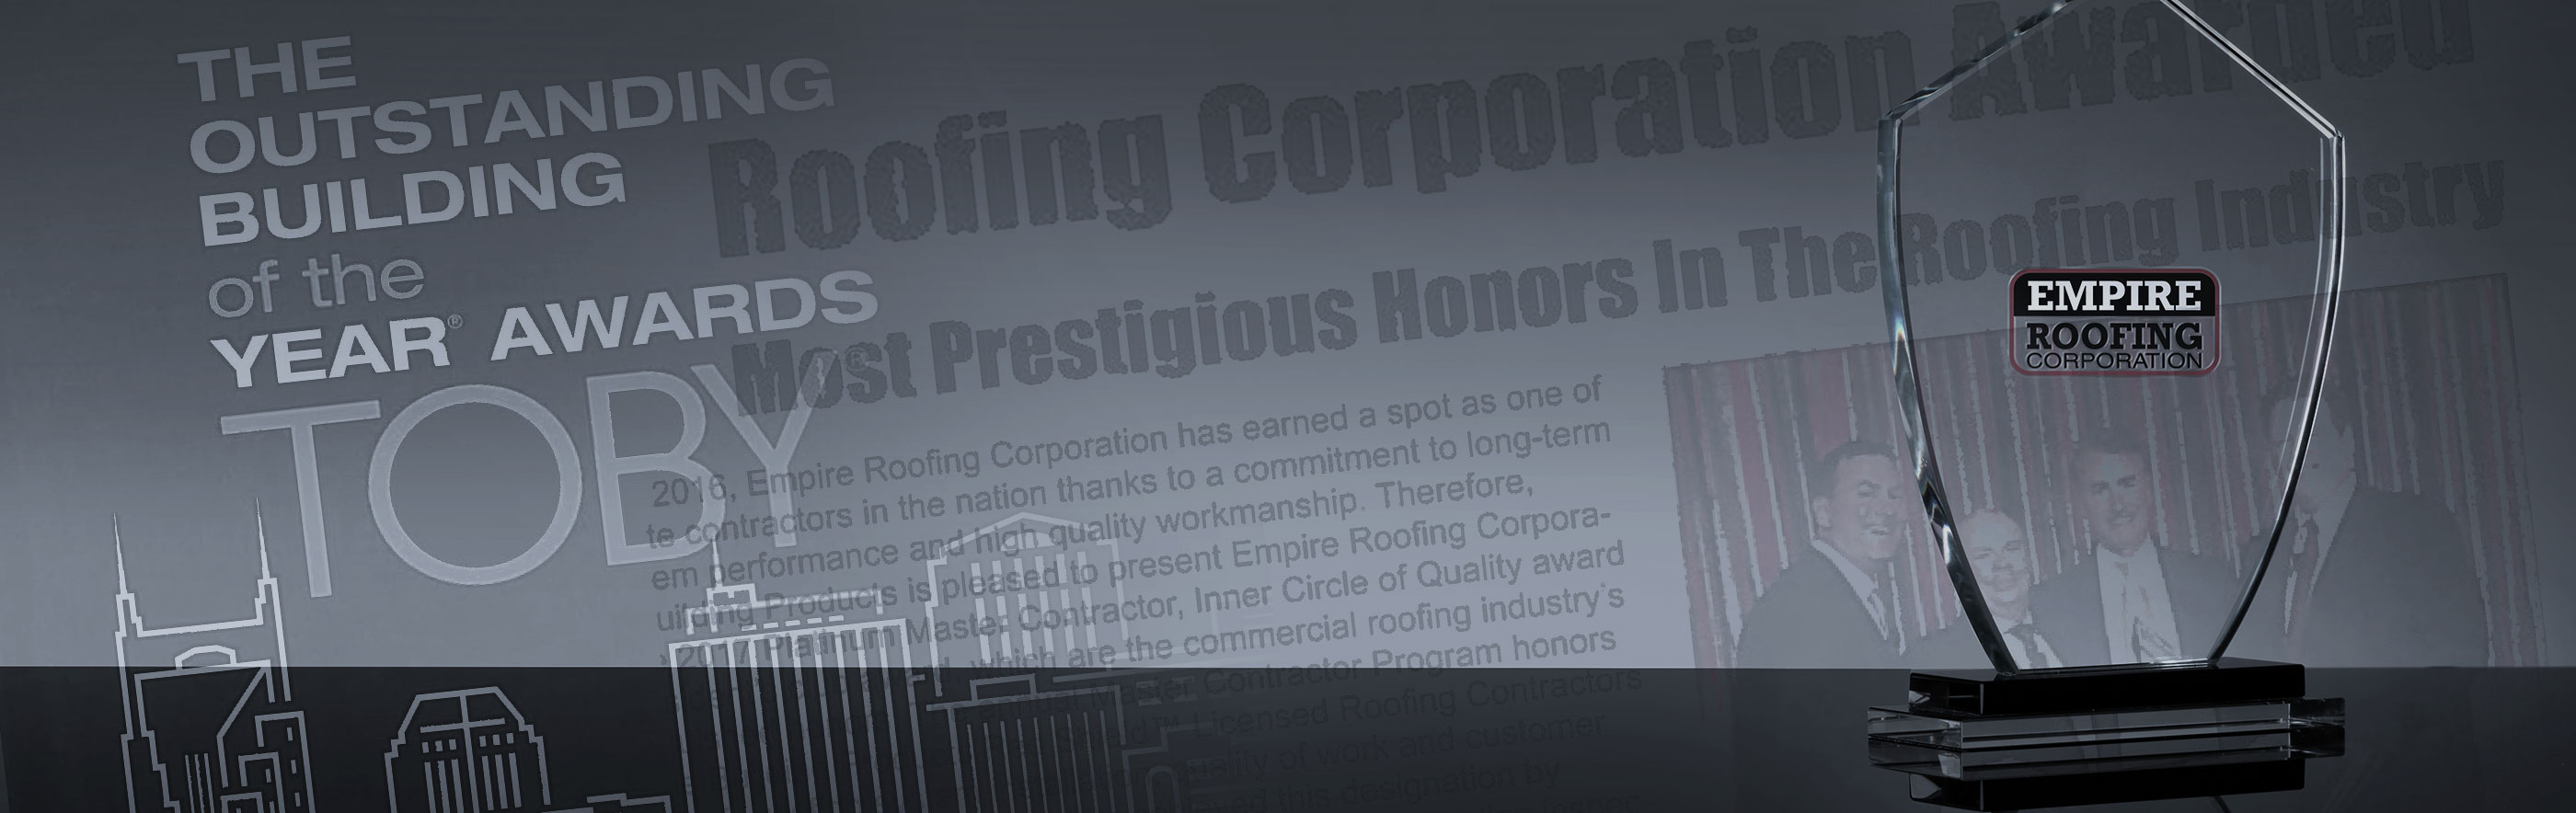 Empire Roofing Corporation prestigious USA award winners